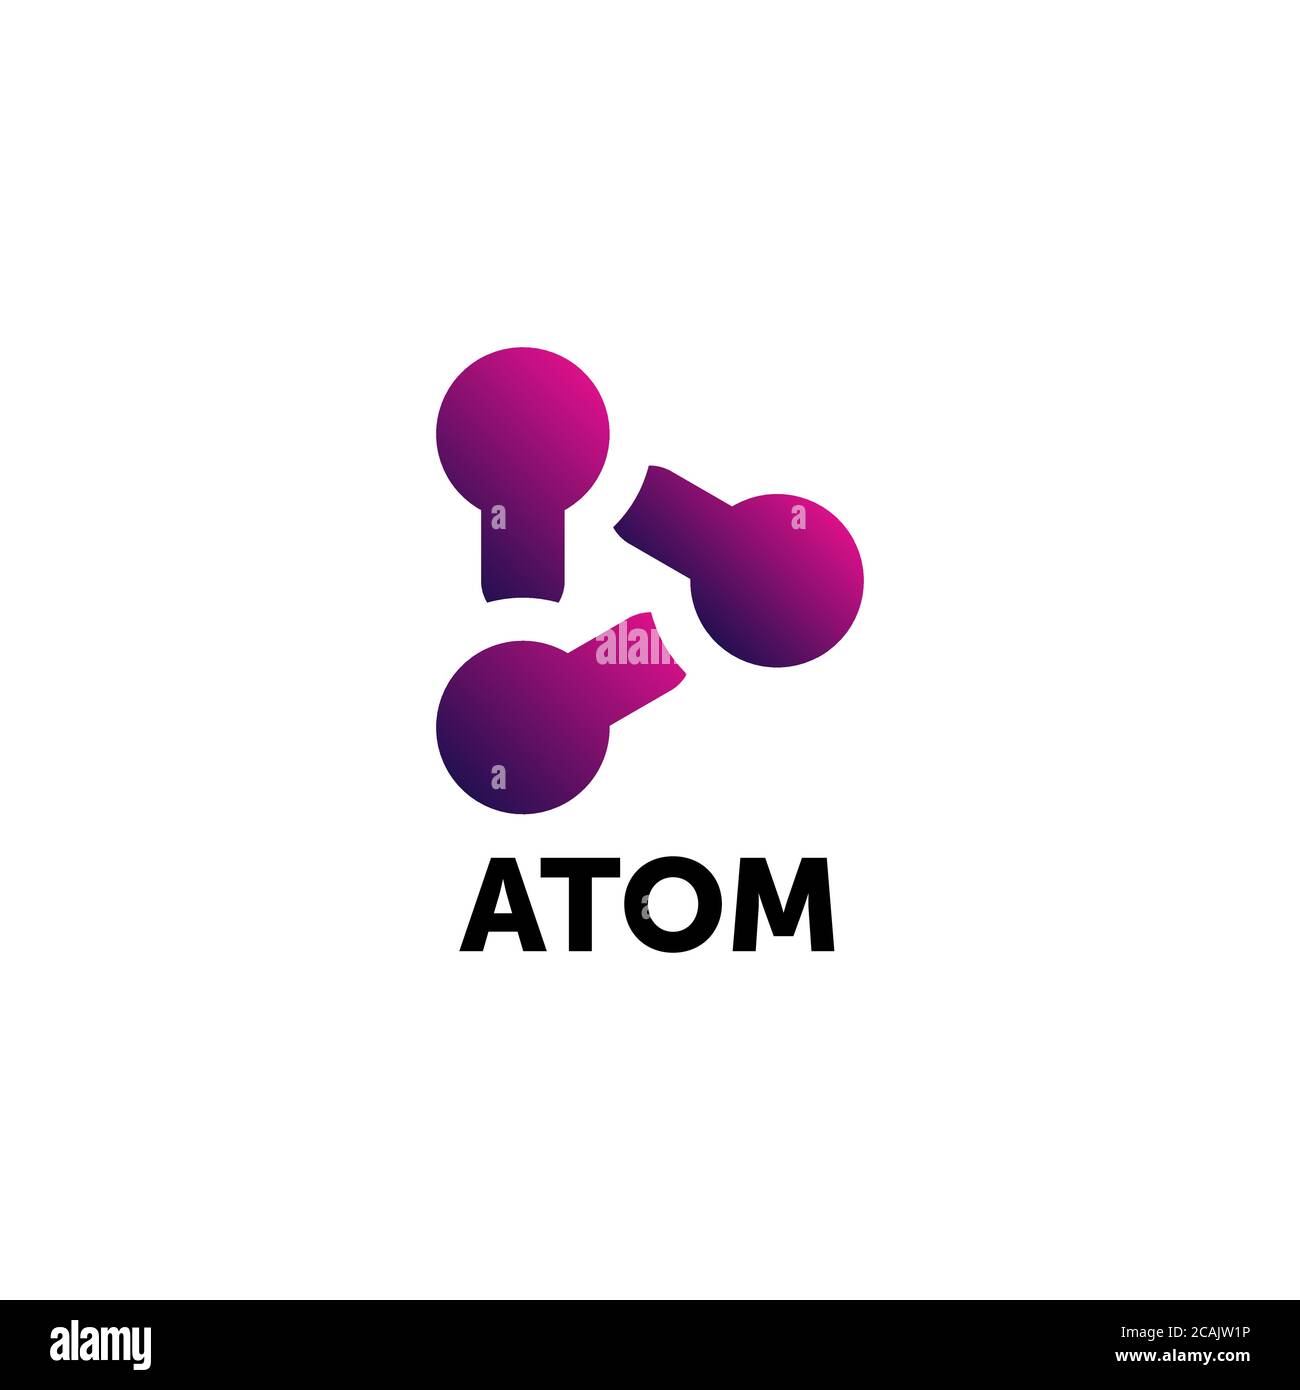 The atom path world of science logo graphic design icon Stock Vector